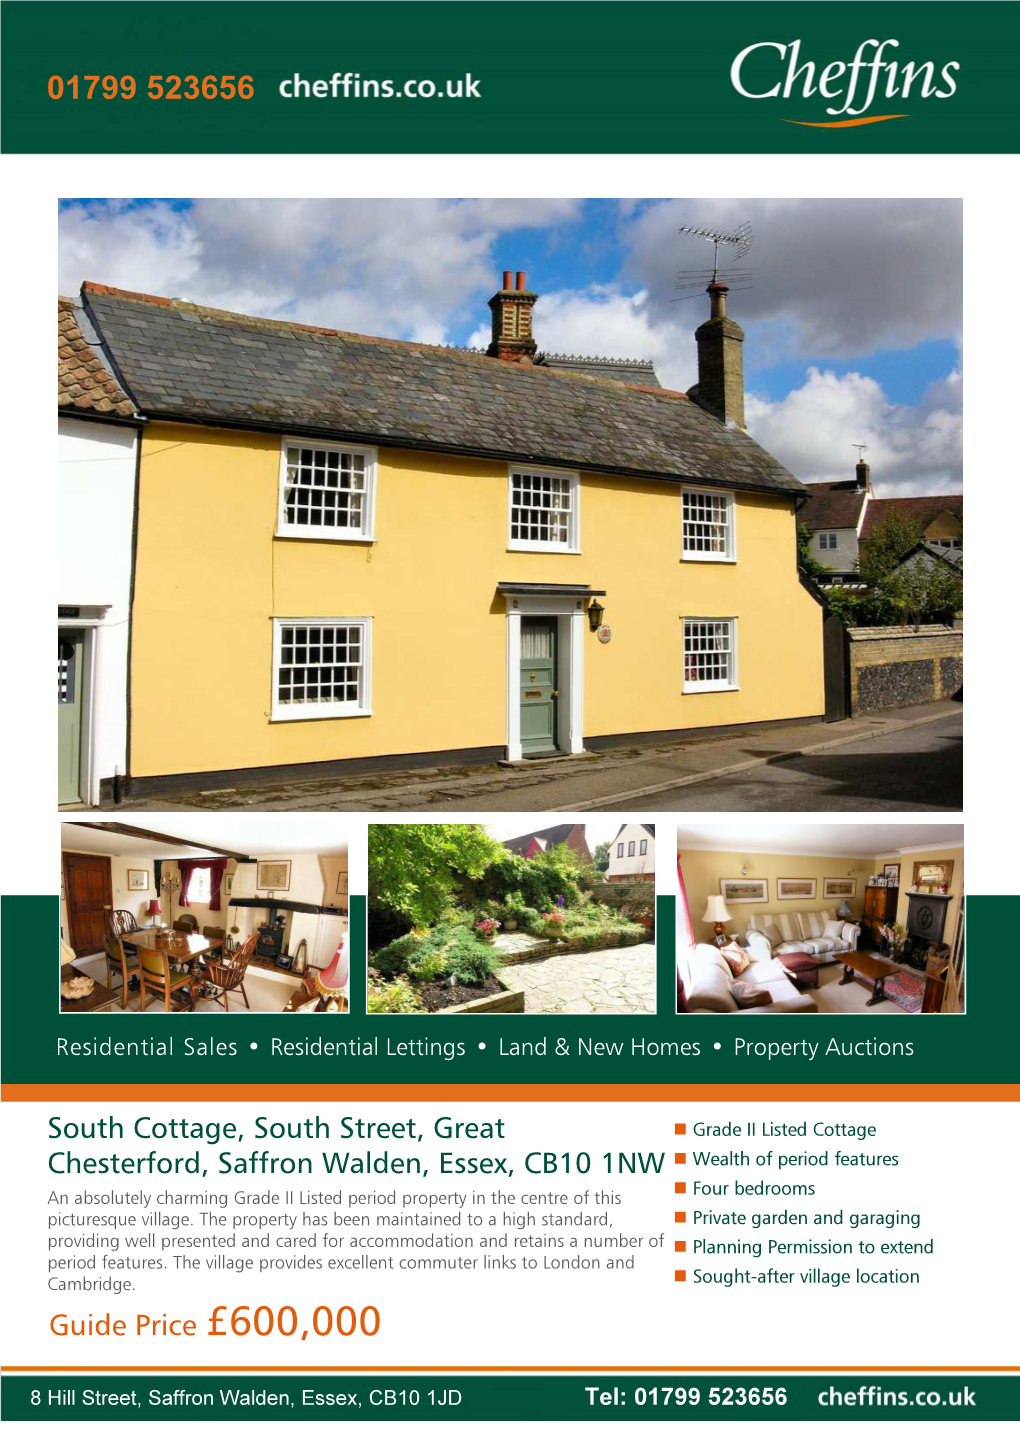 South Cottage, South Street, Great Chesterford, Saffron Walden, Essex